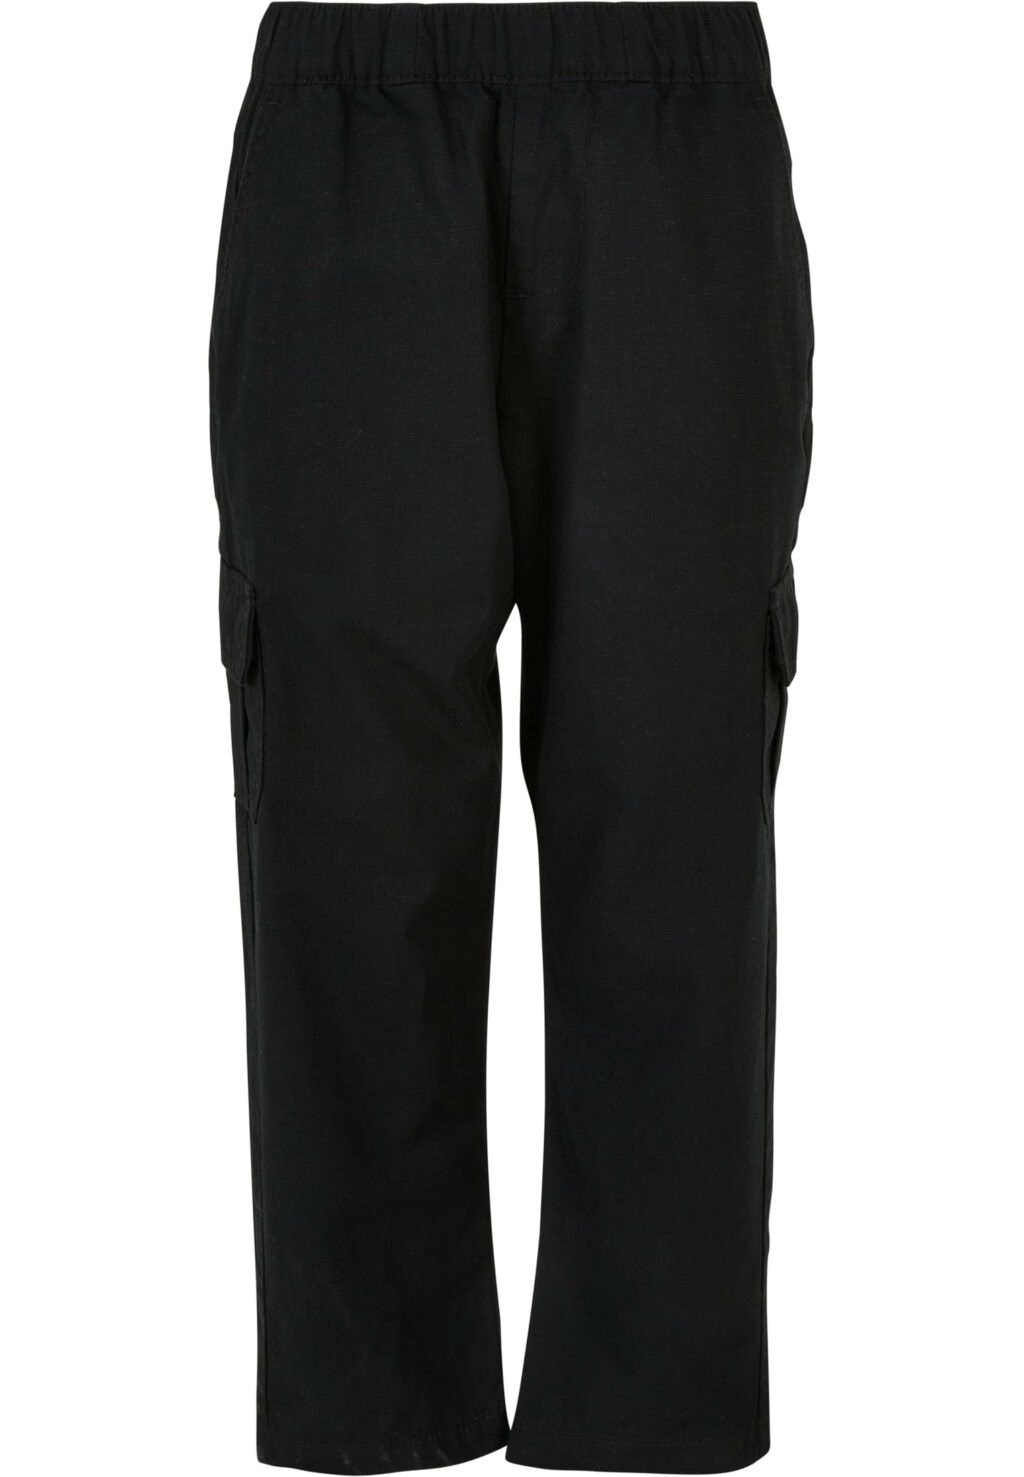 Boys Ripstop Cargo Pants black UCK3199